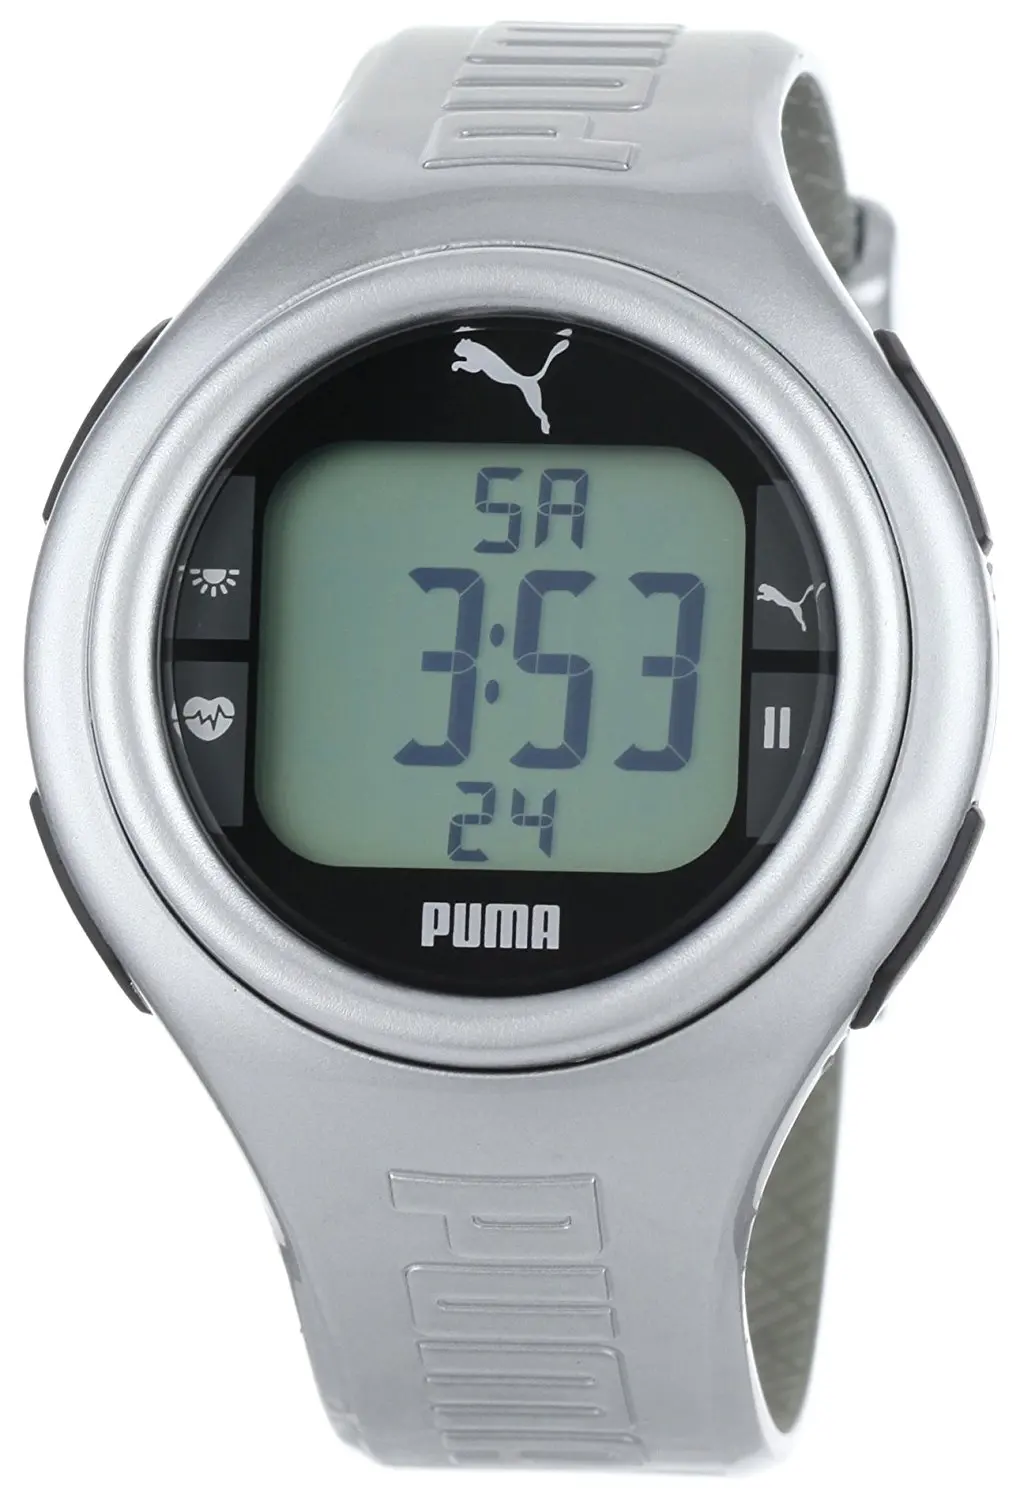 puma led watch price